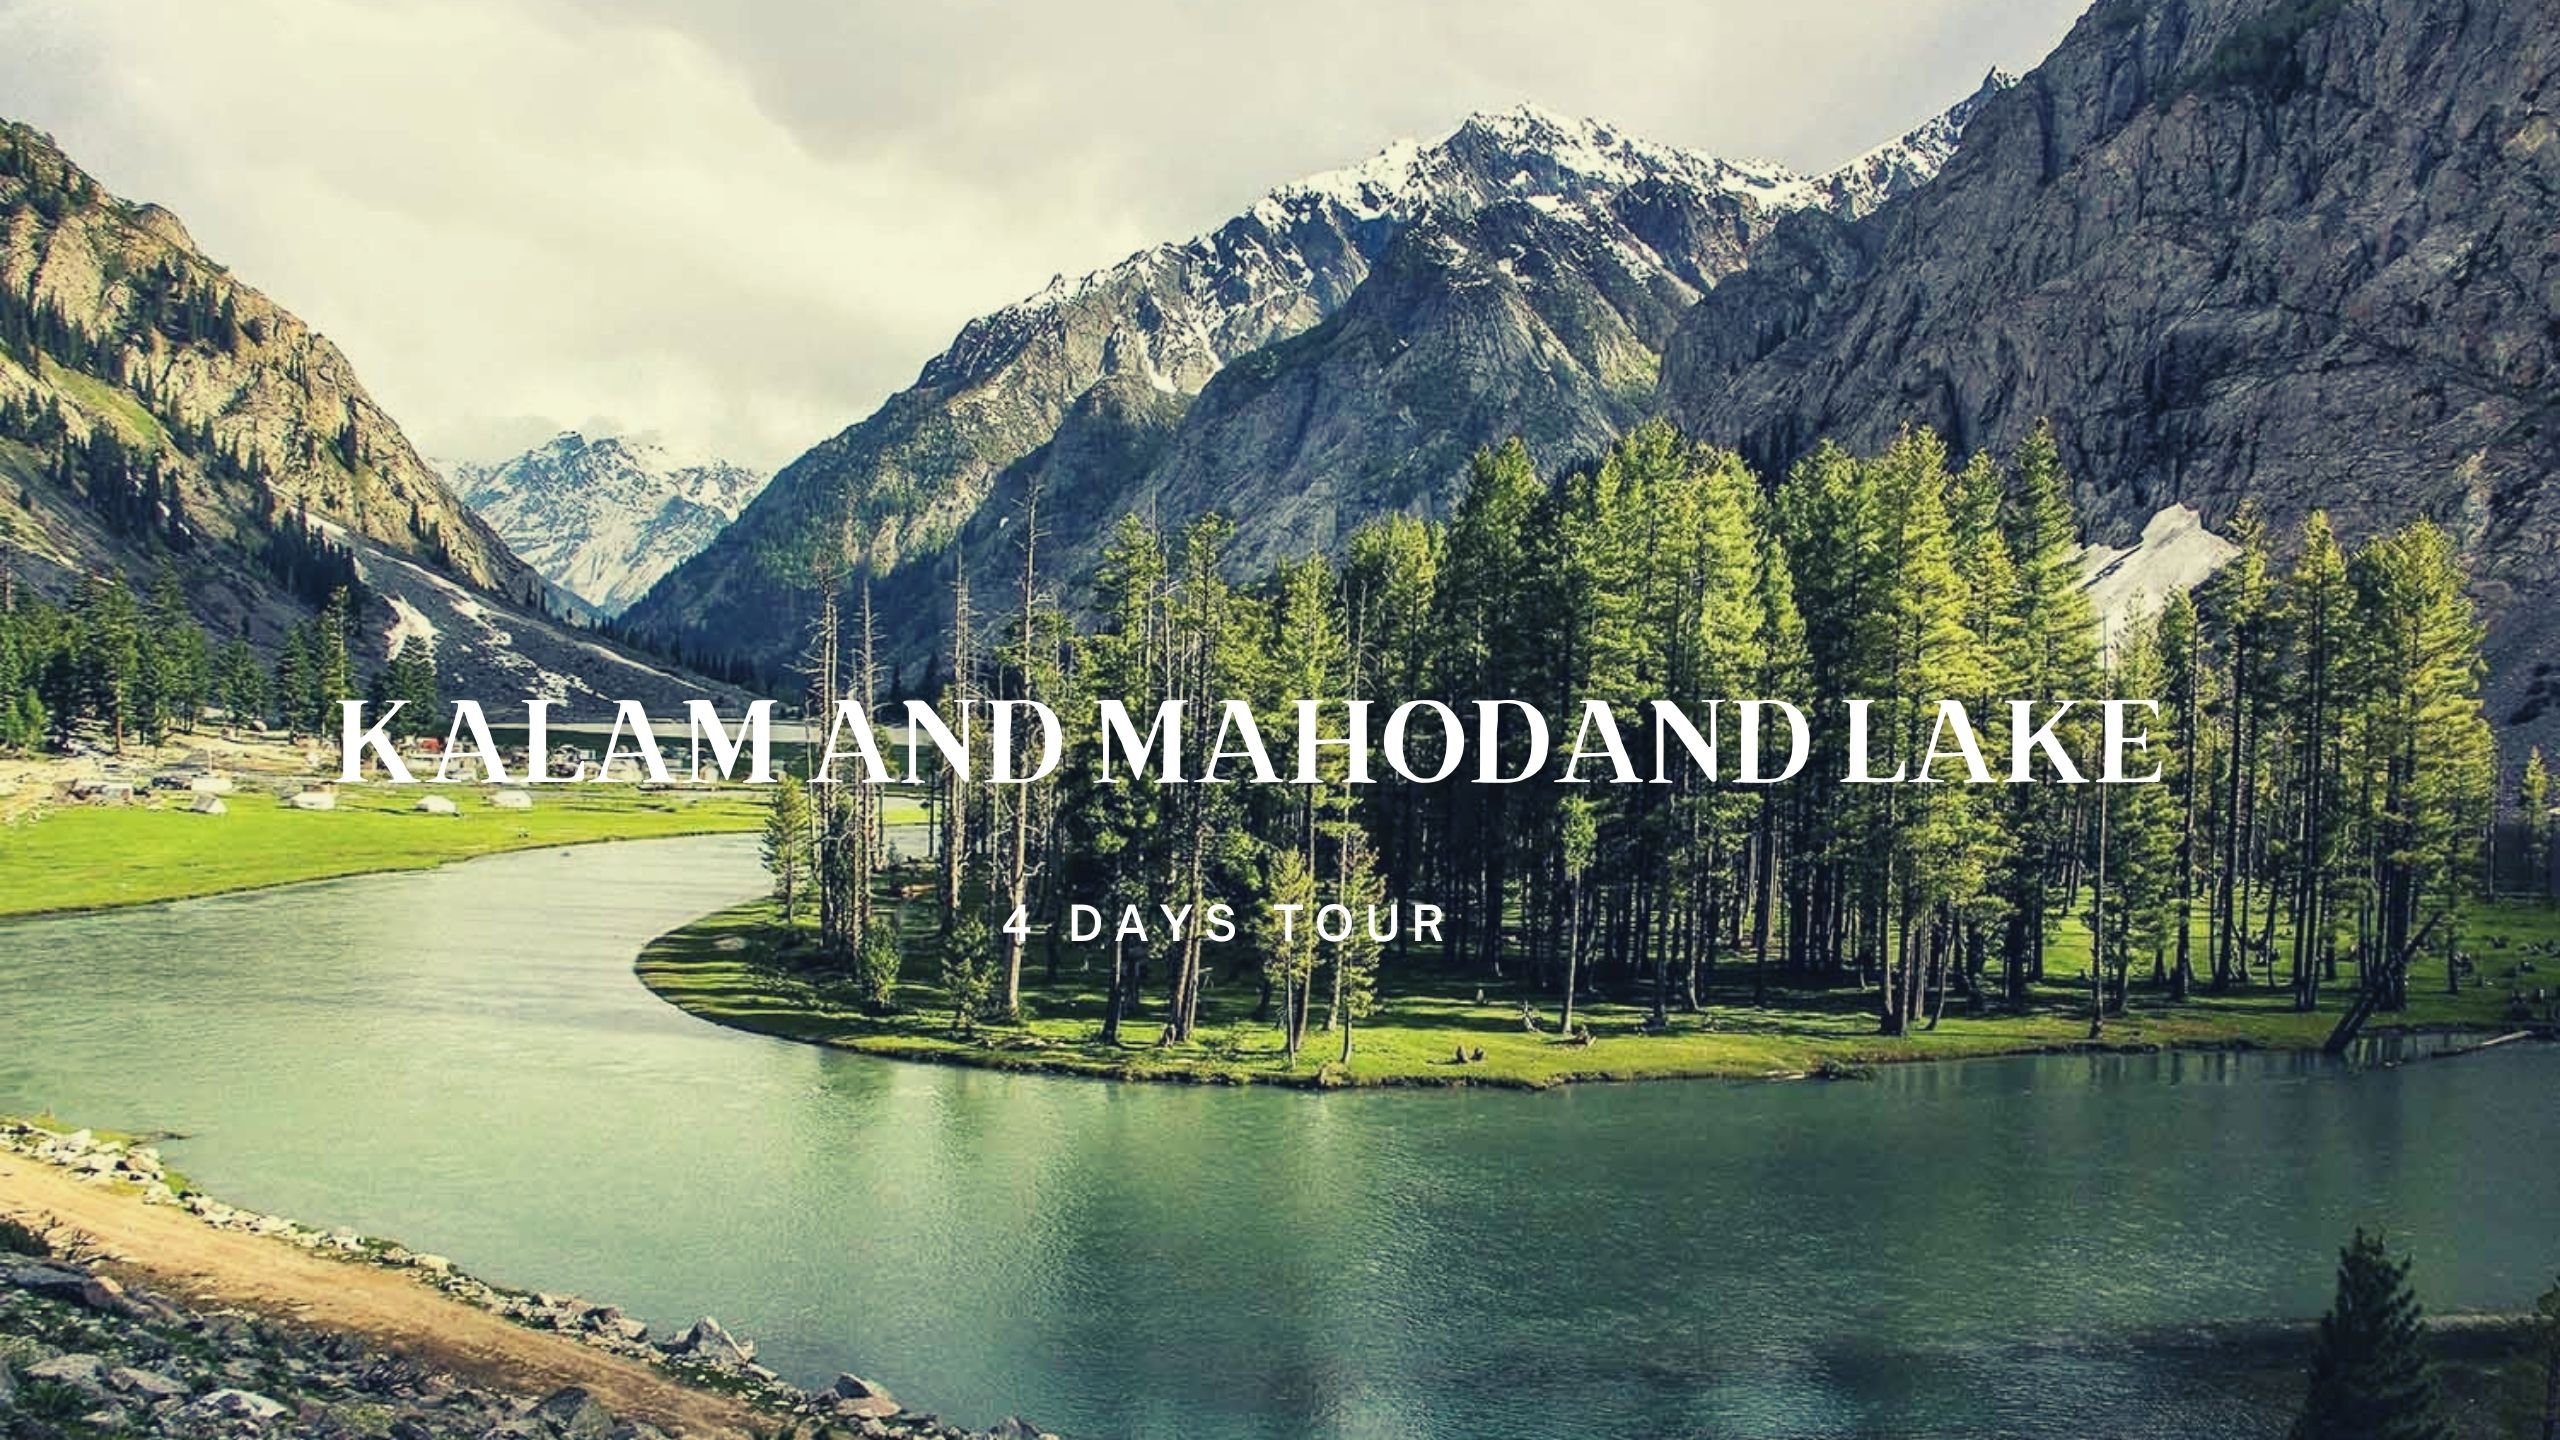 4 Days Trip to Swat, Kalam and Mahodand Lake